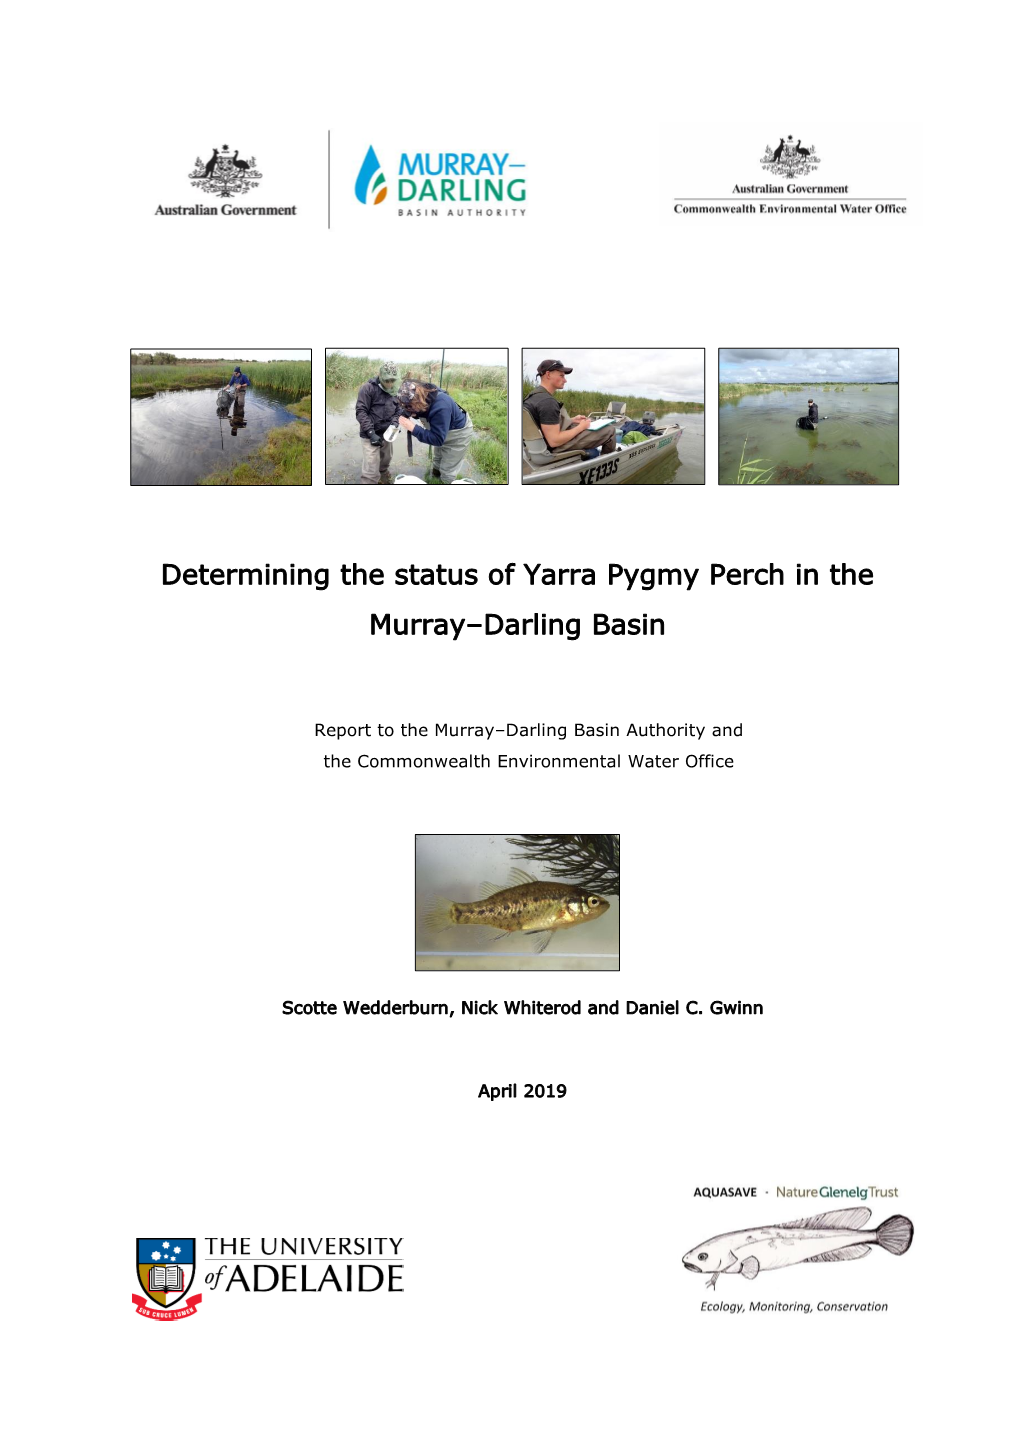 Determining the Status of Yarra Pygmy Perch in the Murray–Darling Basin